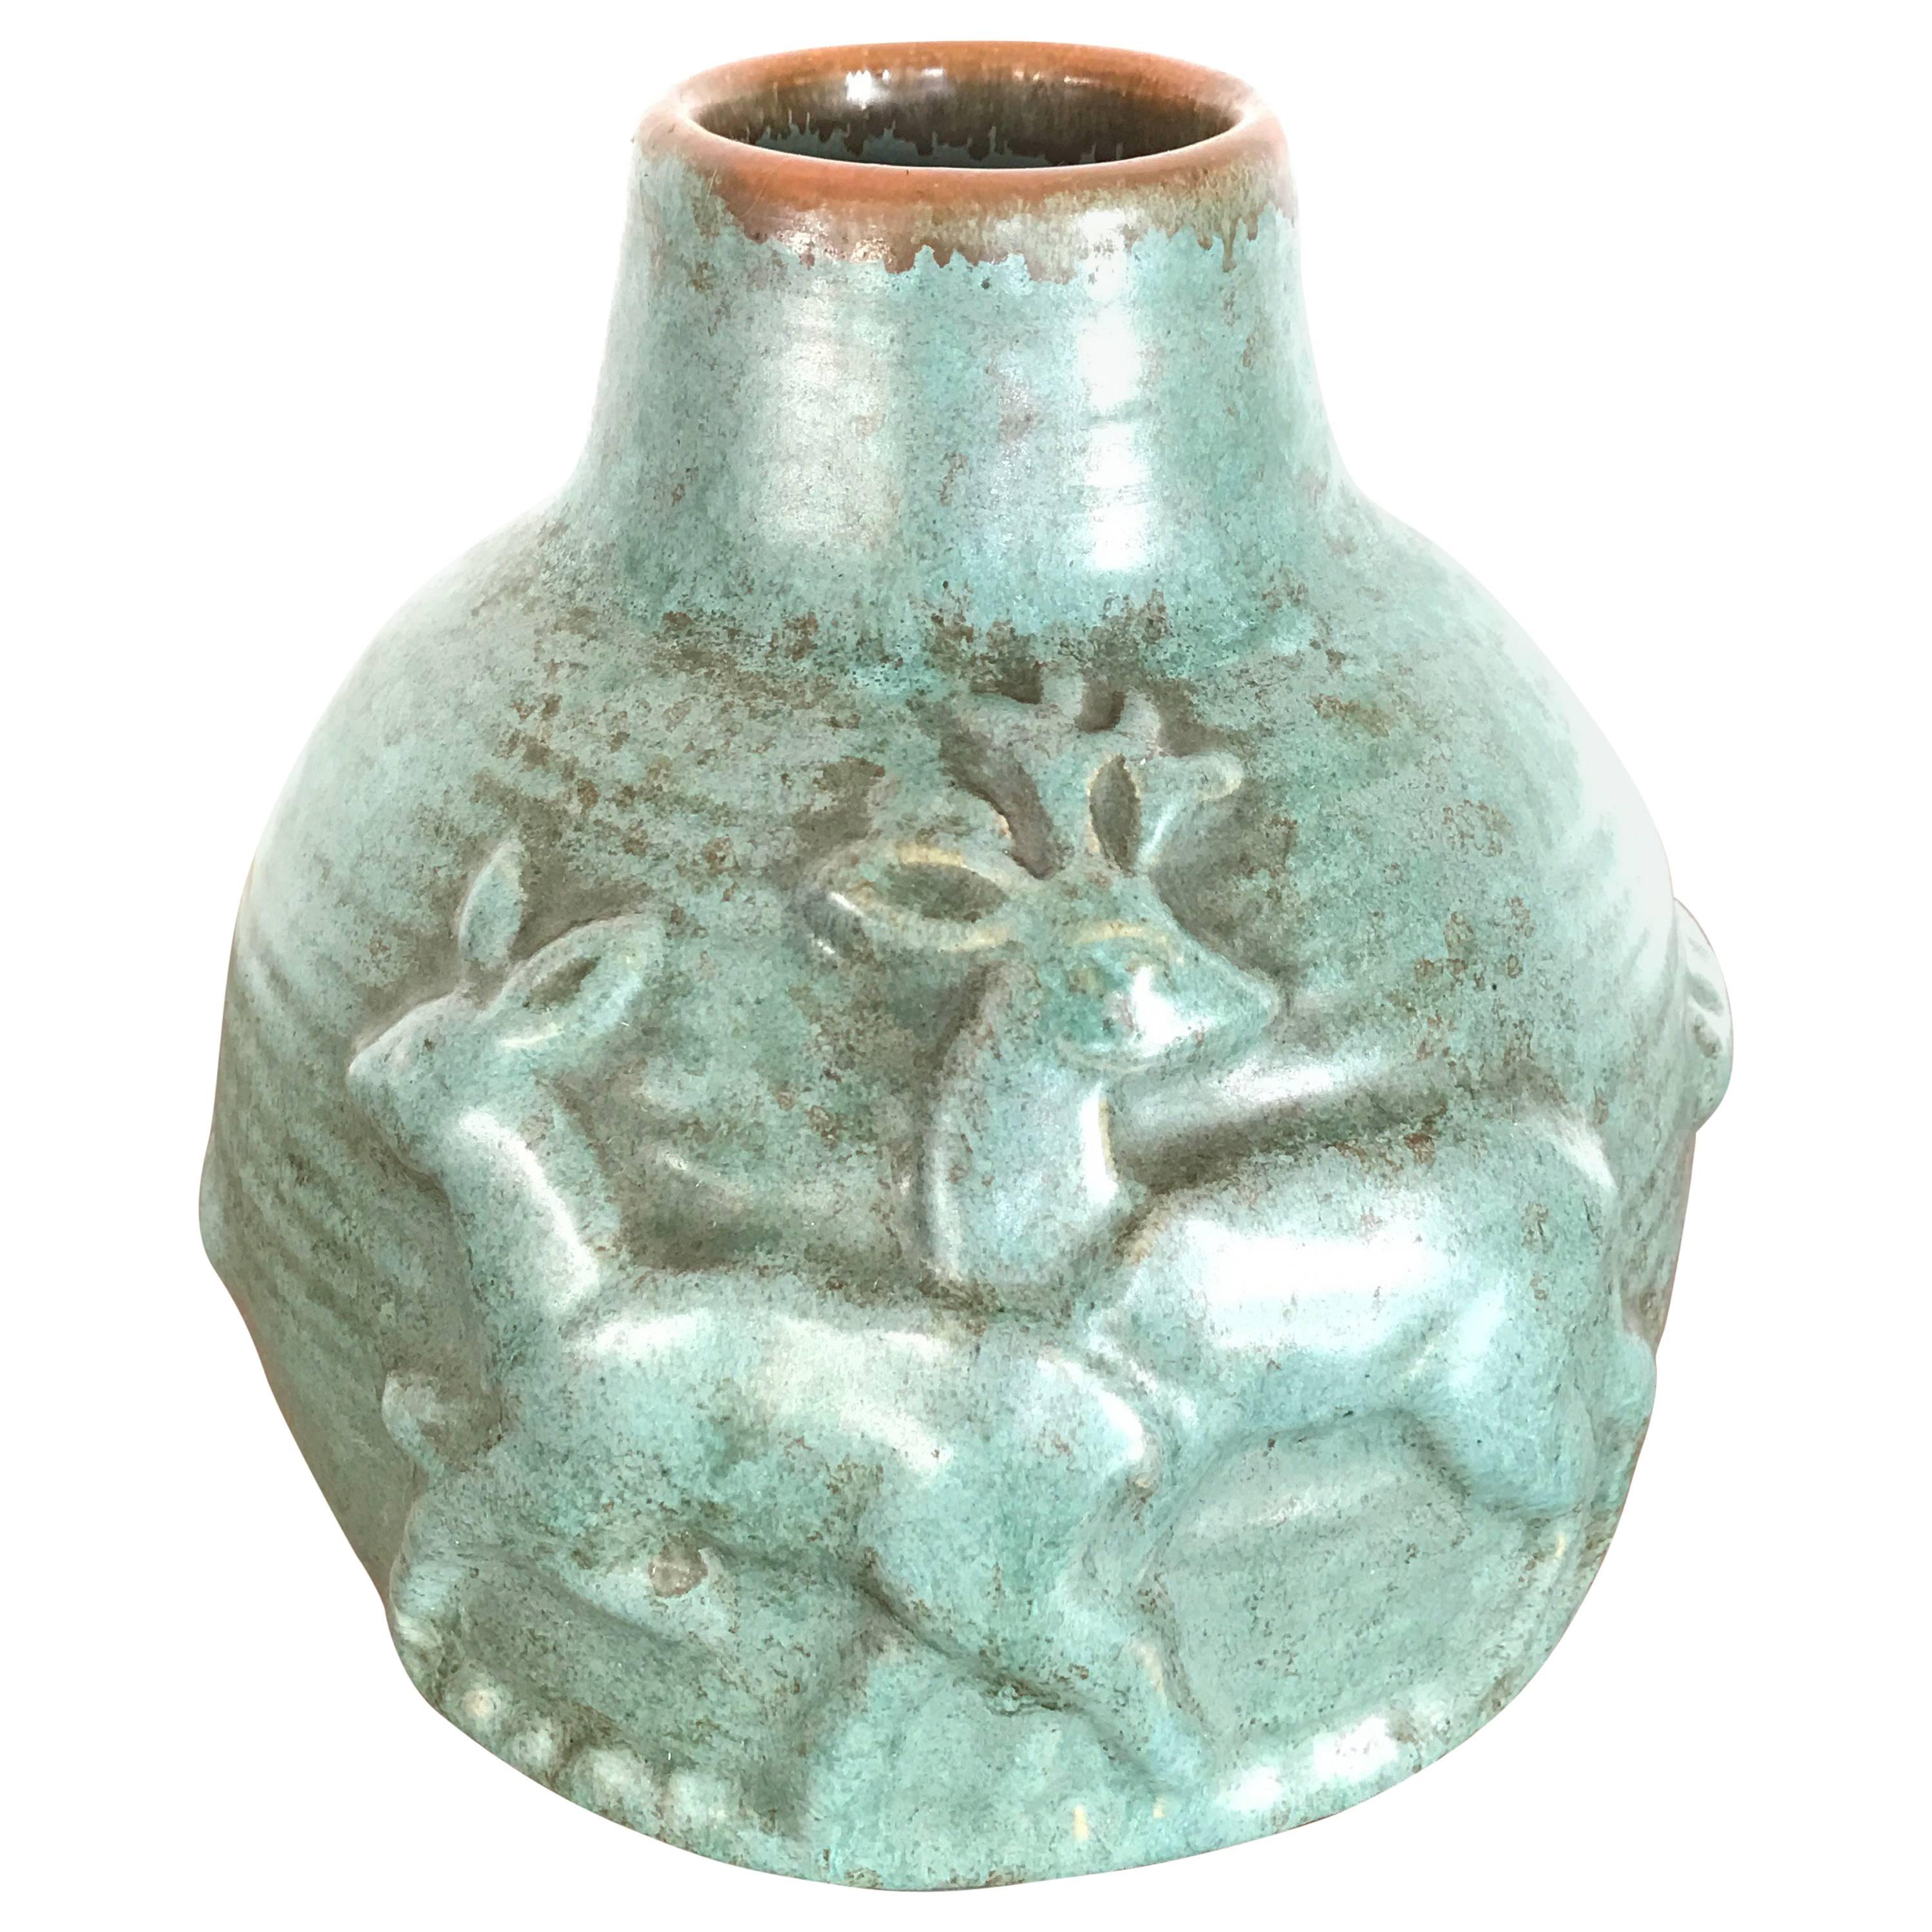 Michael Andersen Stoneware Vase with Green Glaze, 1930s from Denmark